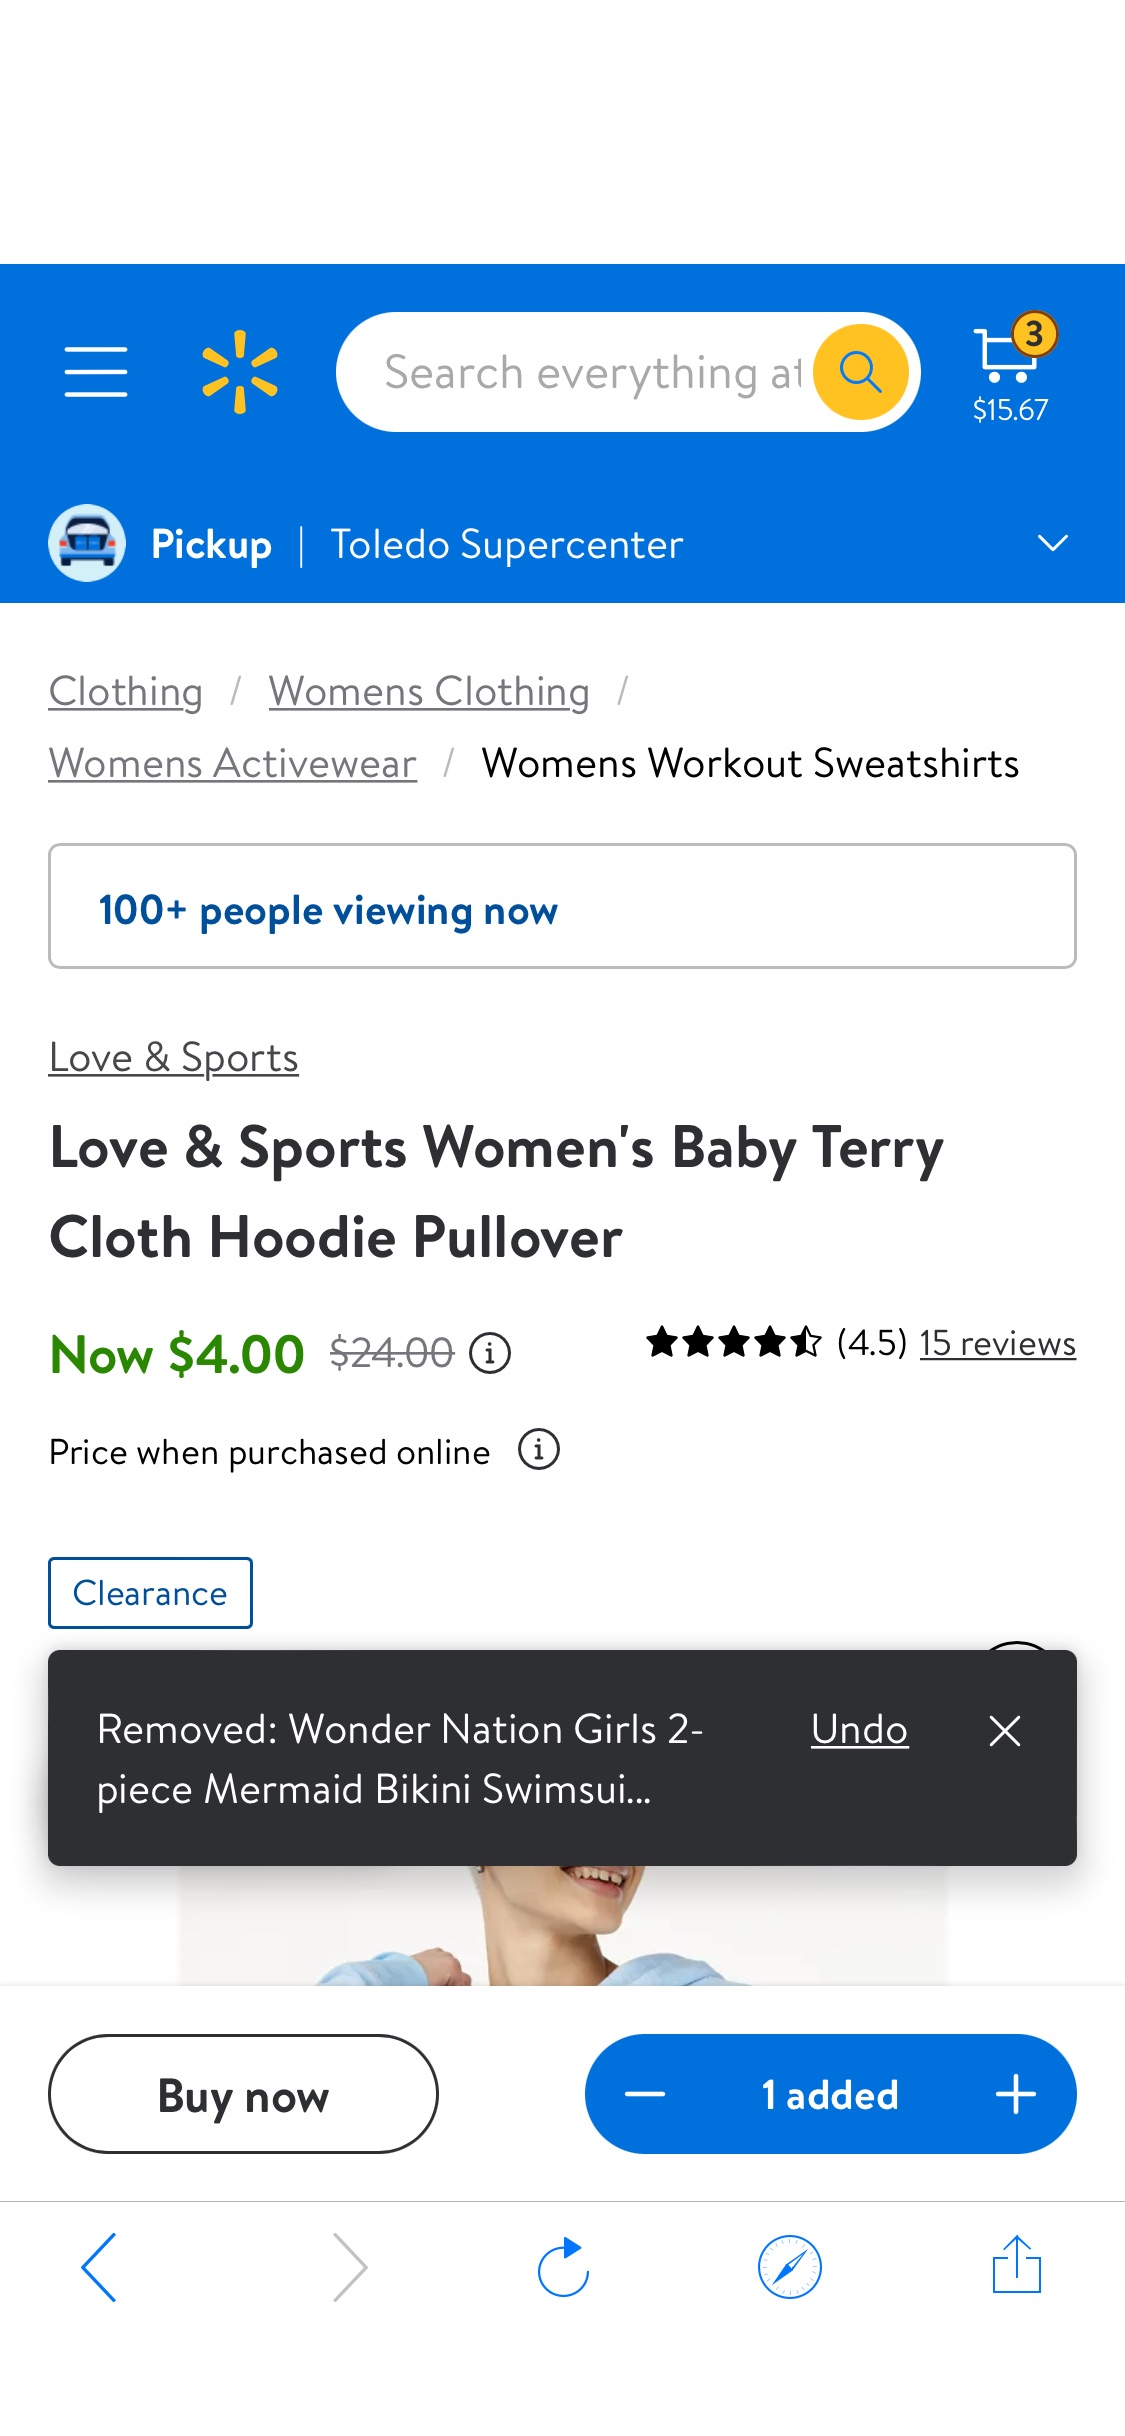 Love & Sports Women's Baby Terry Cloth Hoodie卫衣 Pullover - Walmart.com